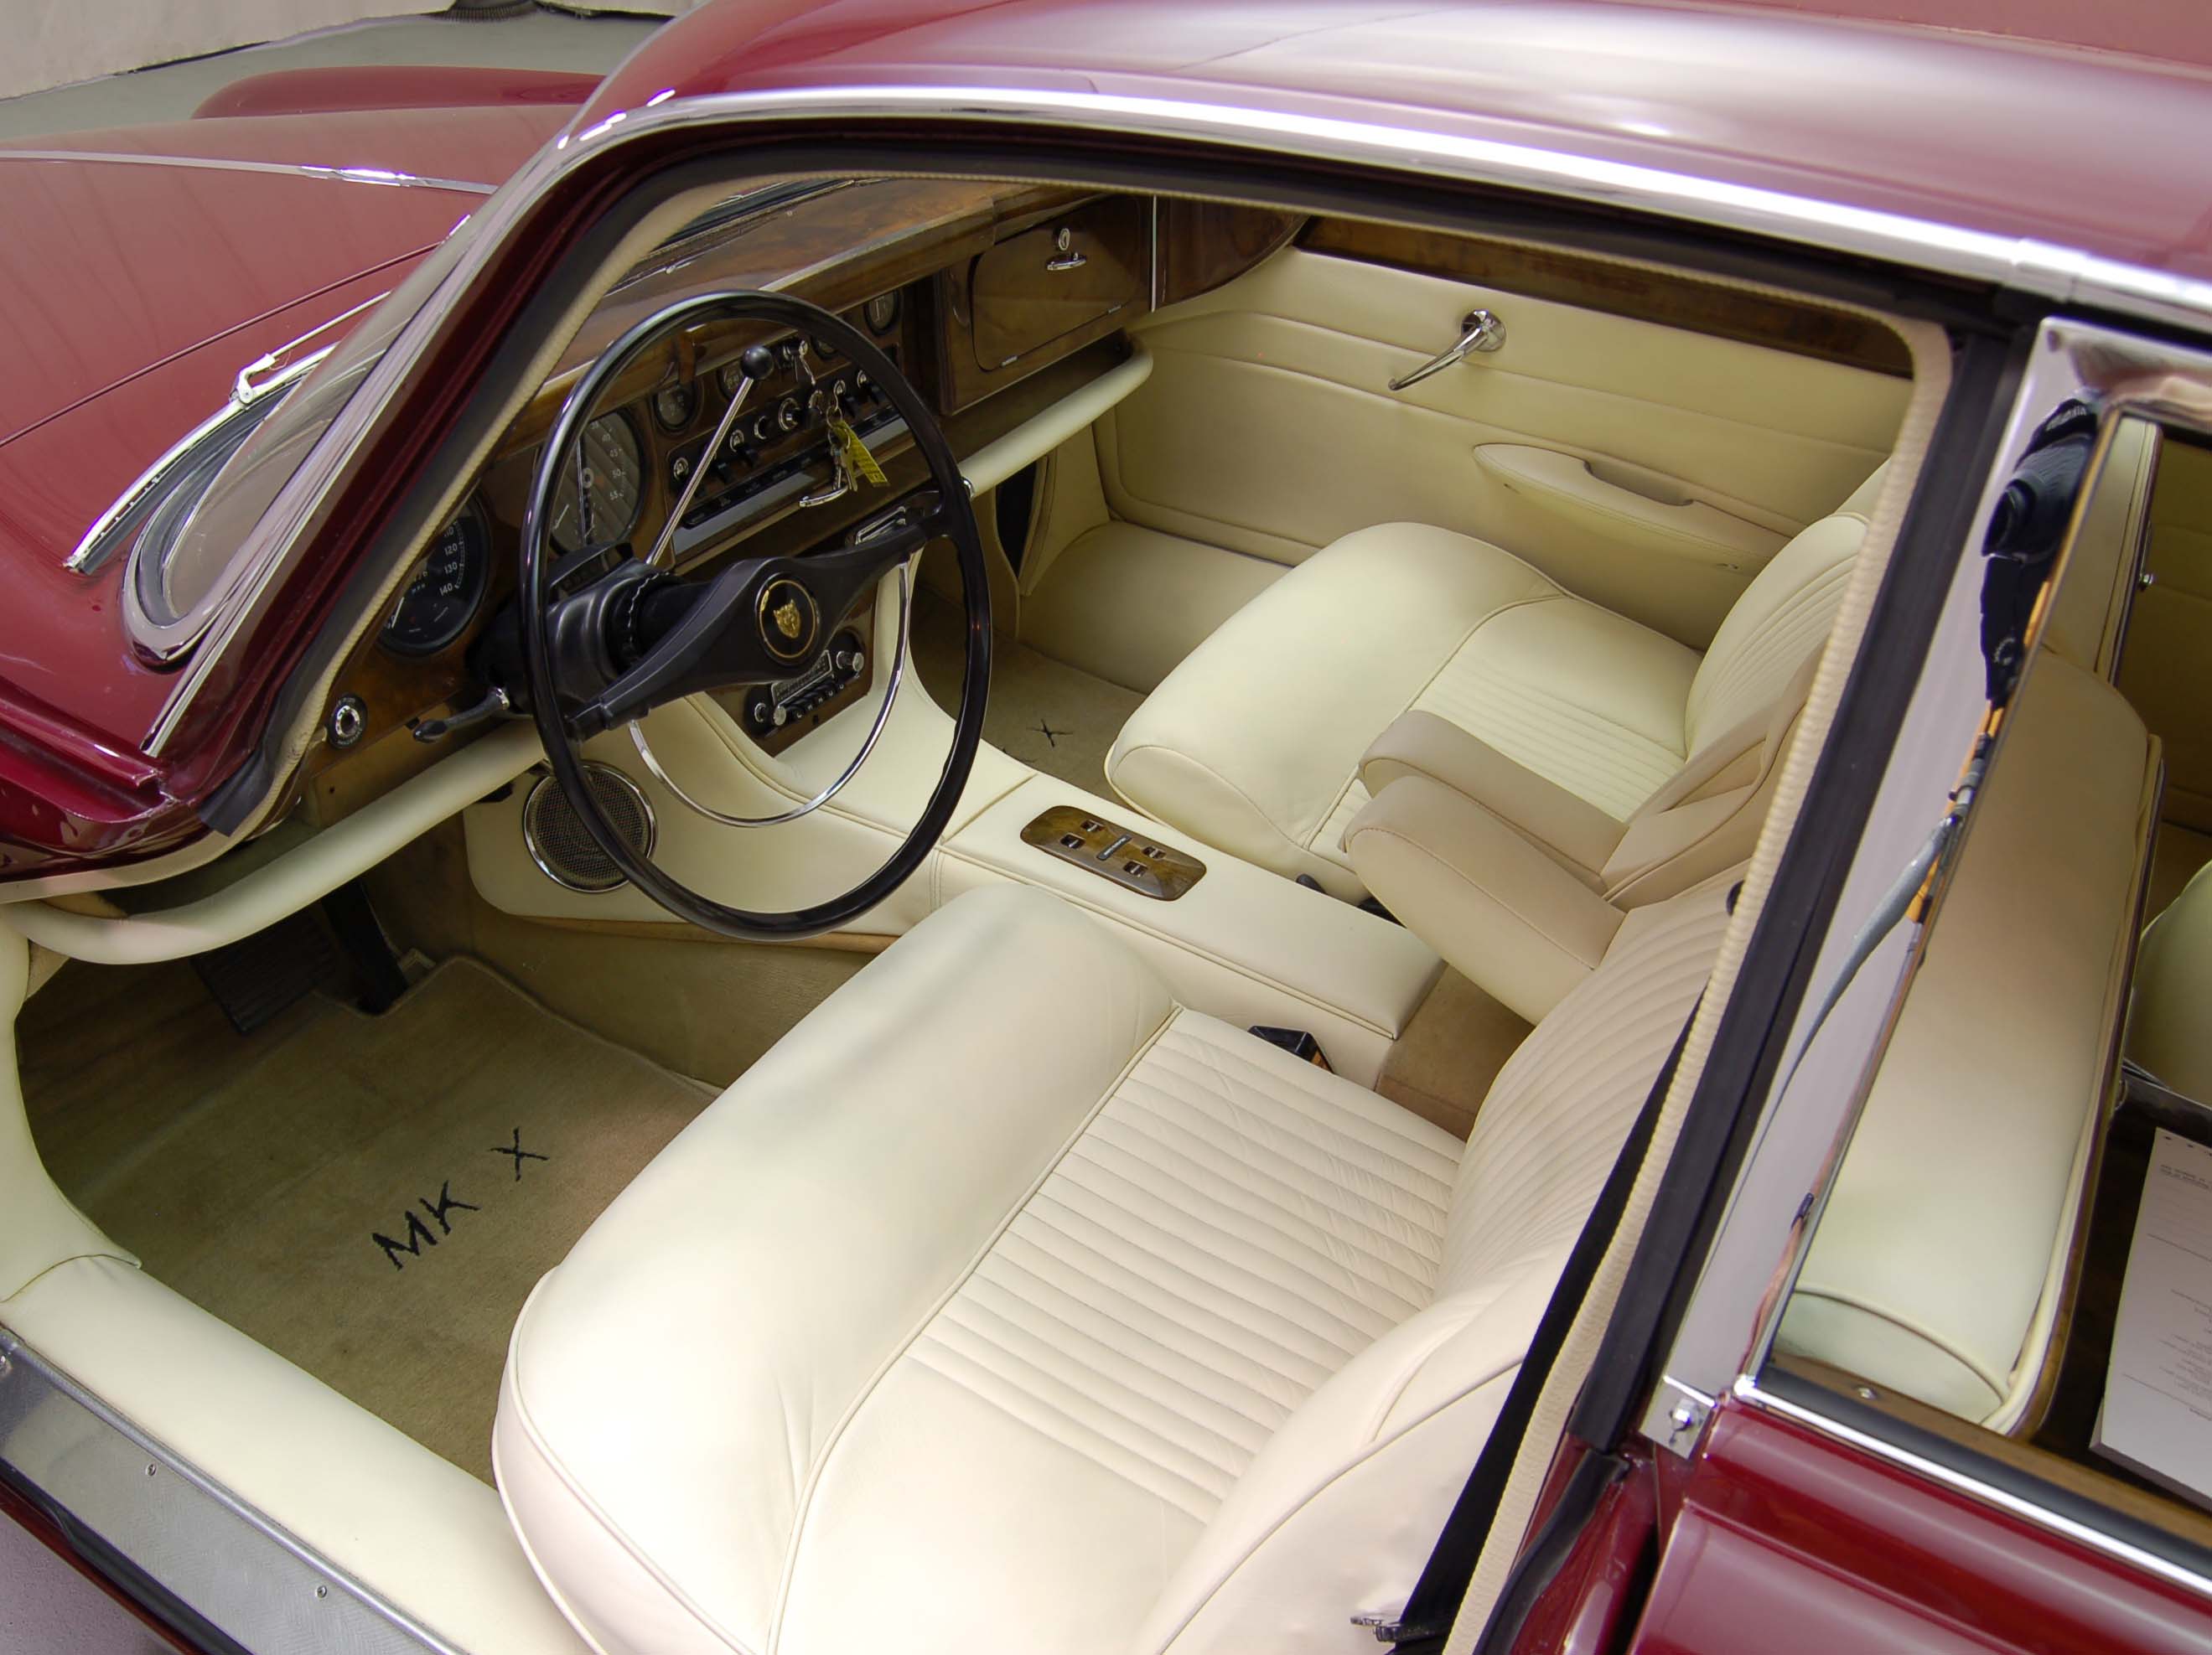 1964 jaguar mark x 3.8